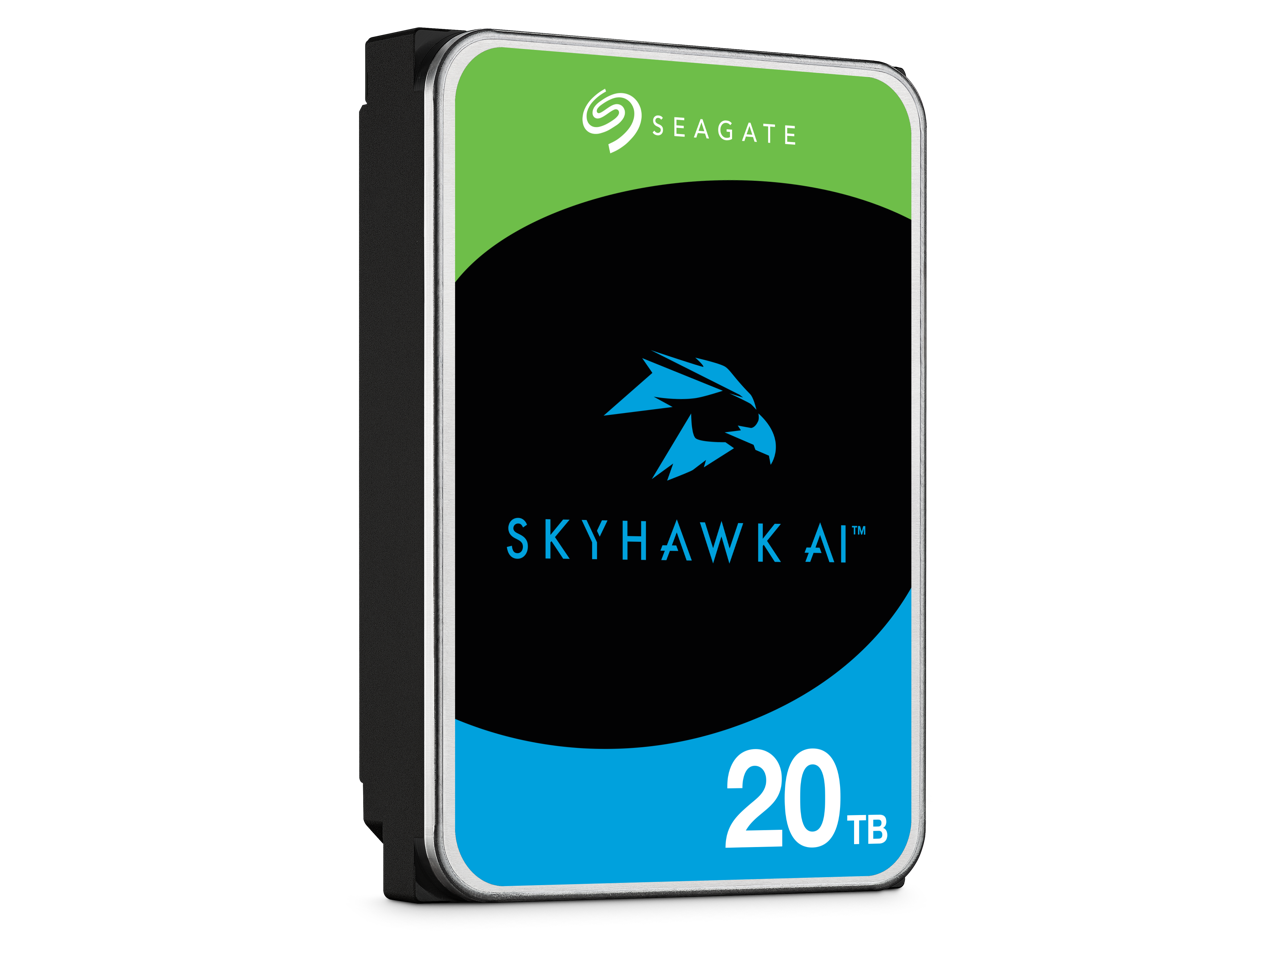 Seagate SkyHawk AI ST20000VE002 20TB 7200 RPM 256MB Cache SATA 6.0Gb/s 3.5" Internal Hard Drive - image 3 of 4